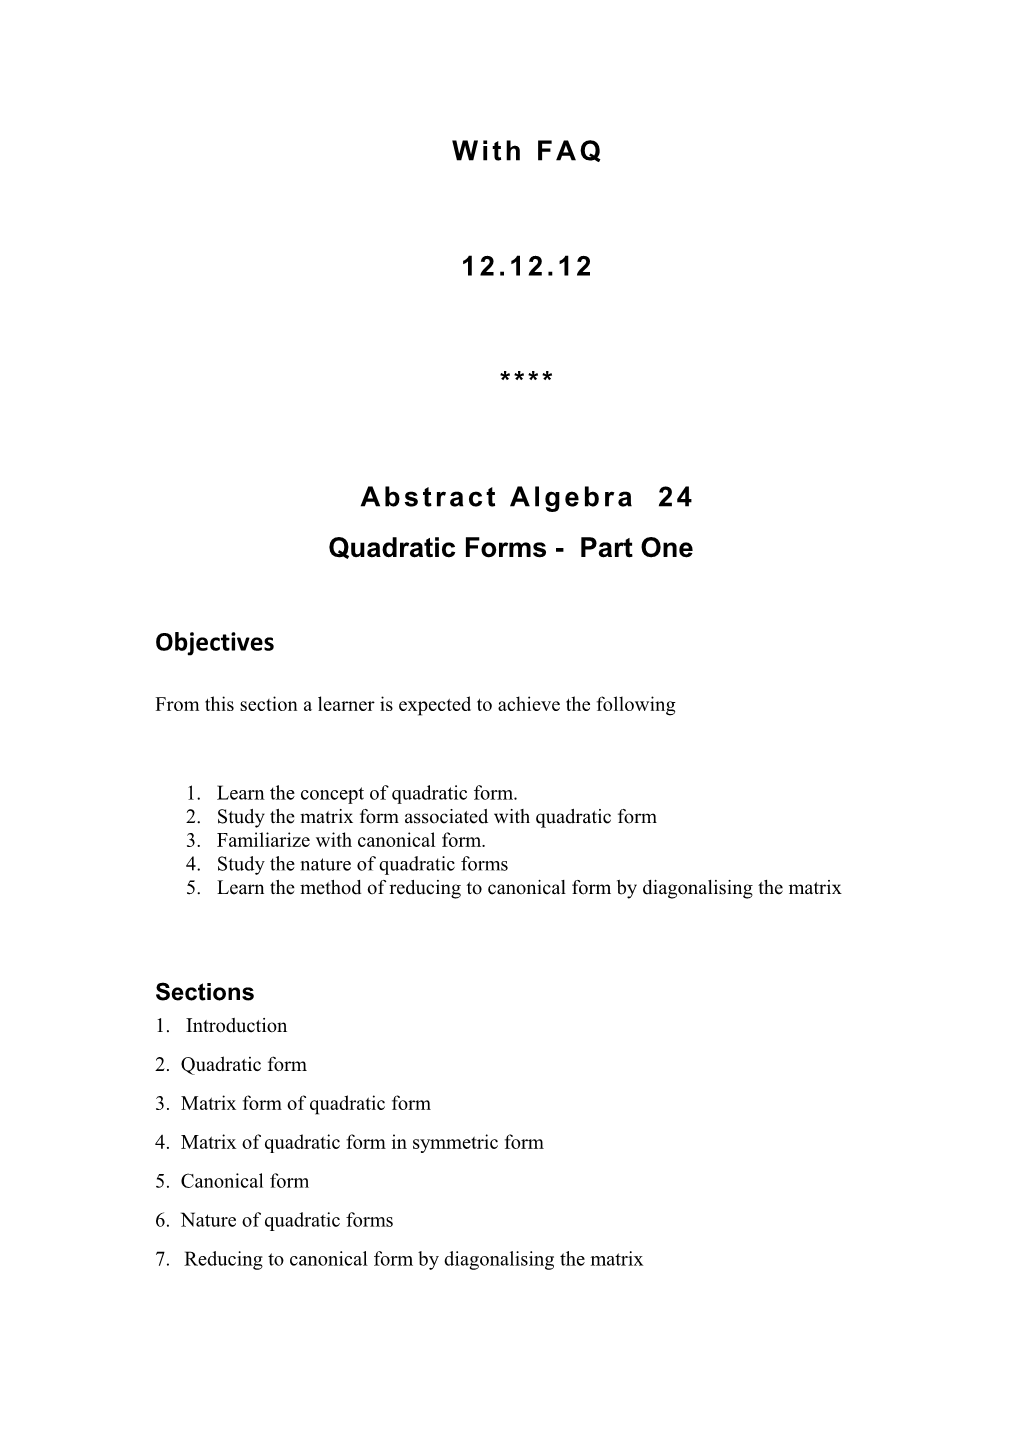 Quadratic Forms - Part One